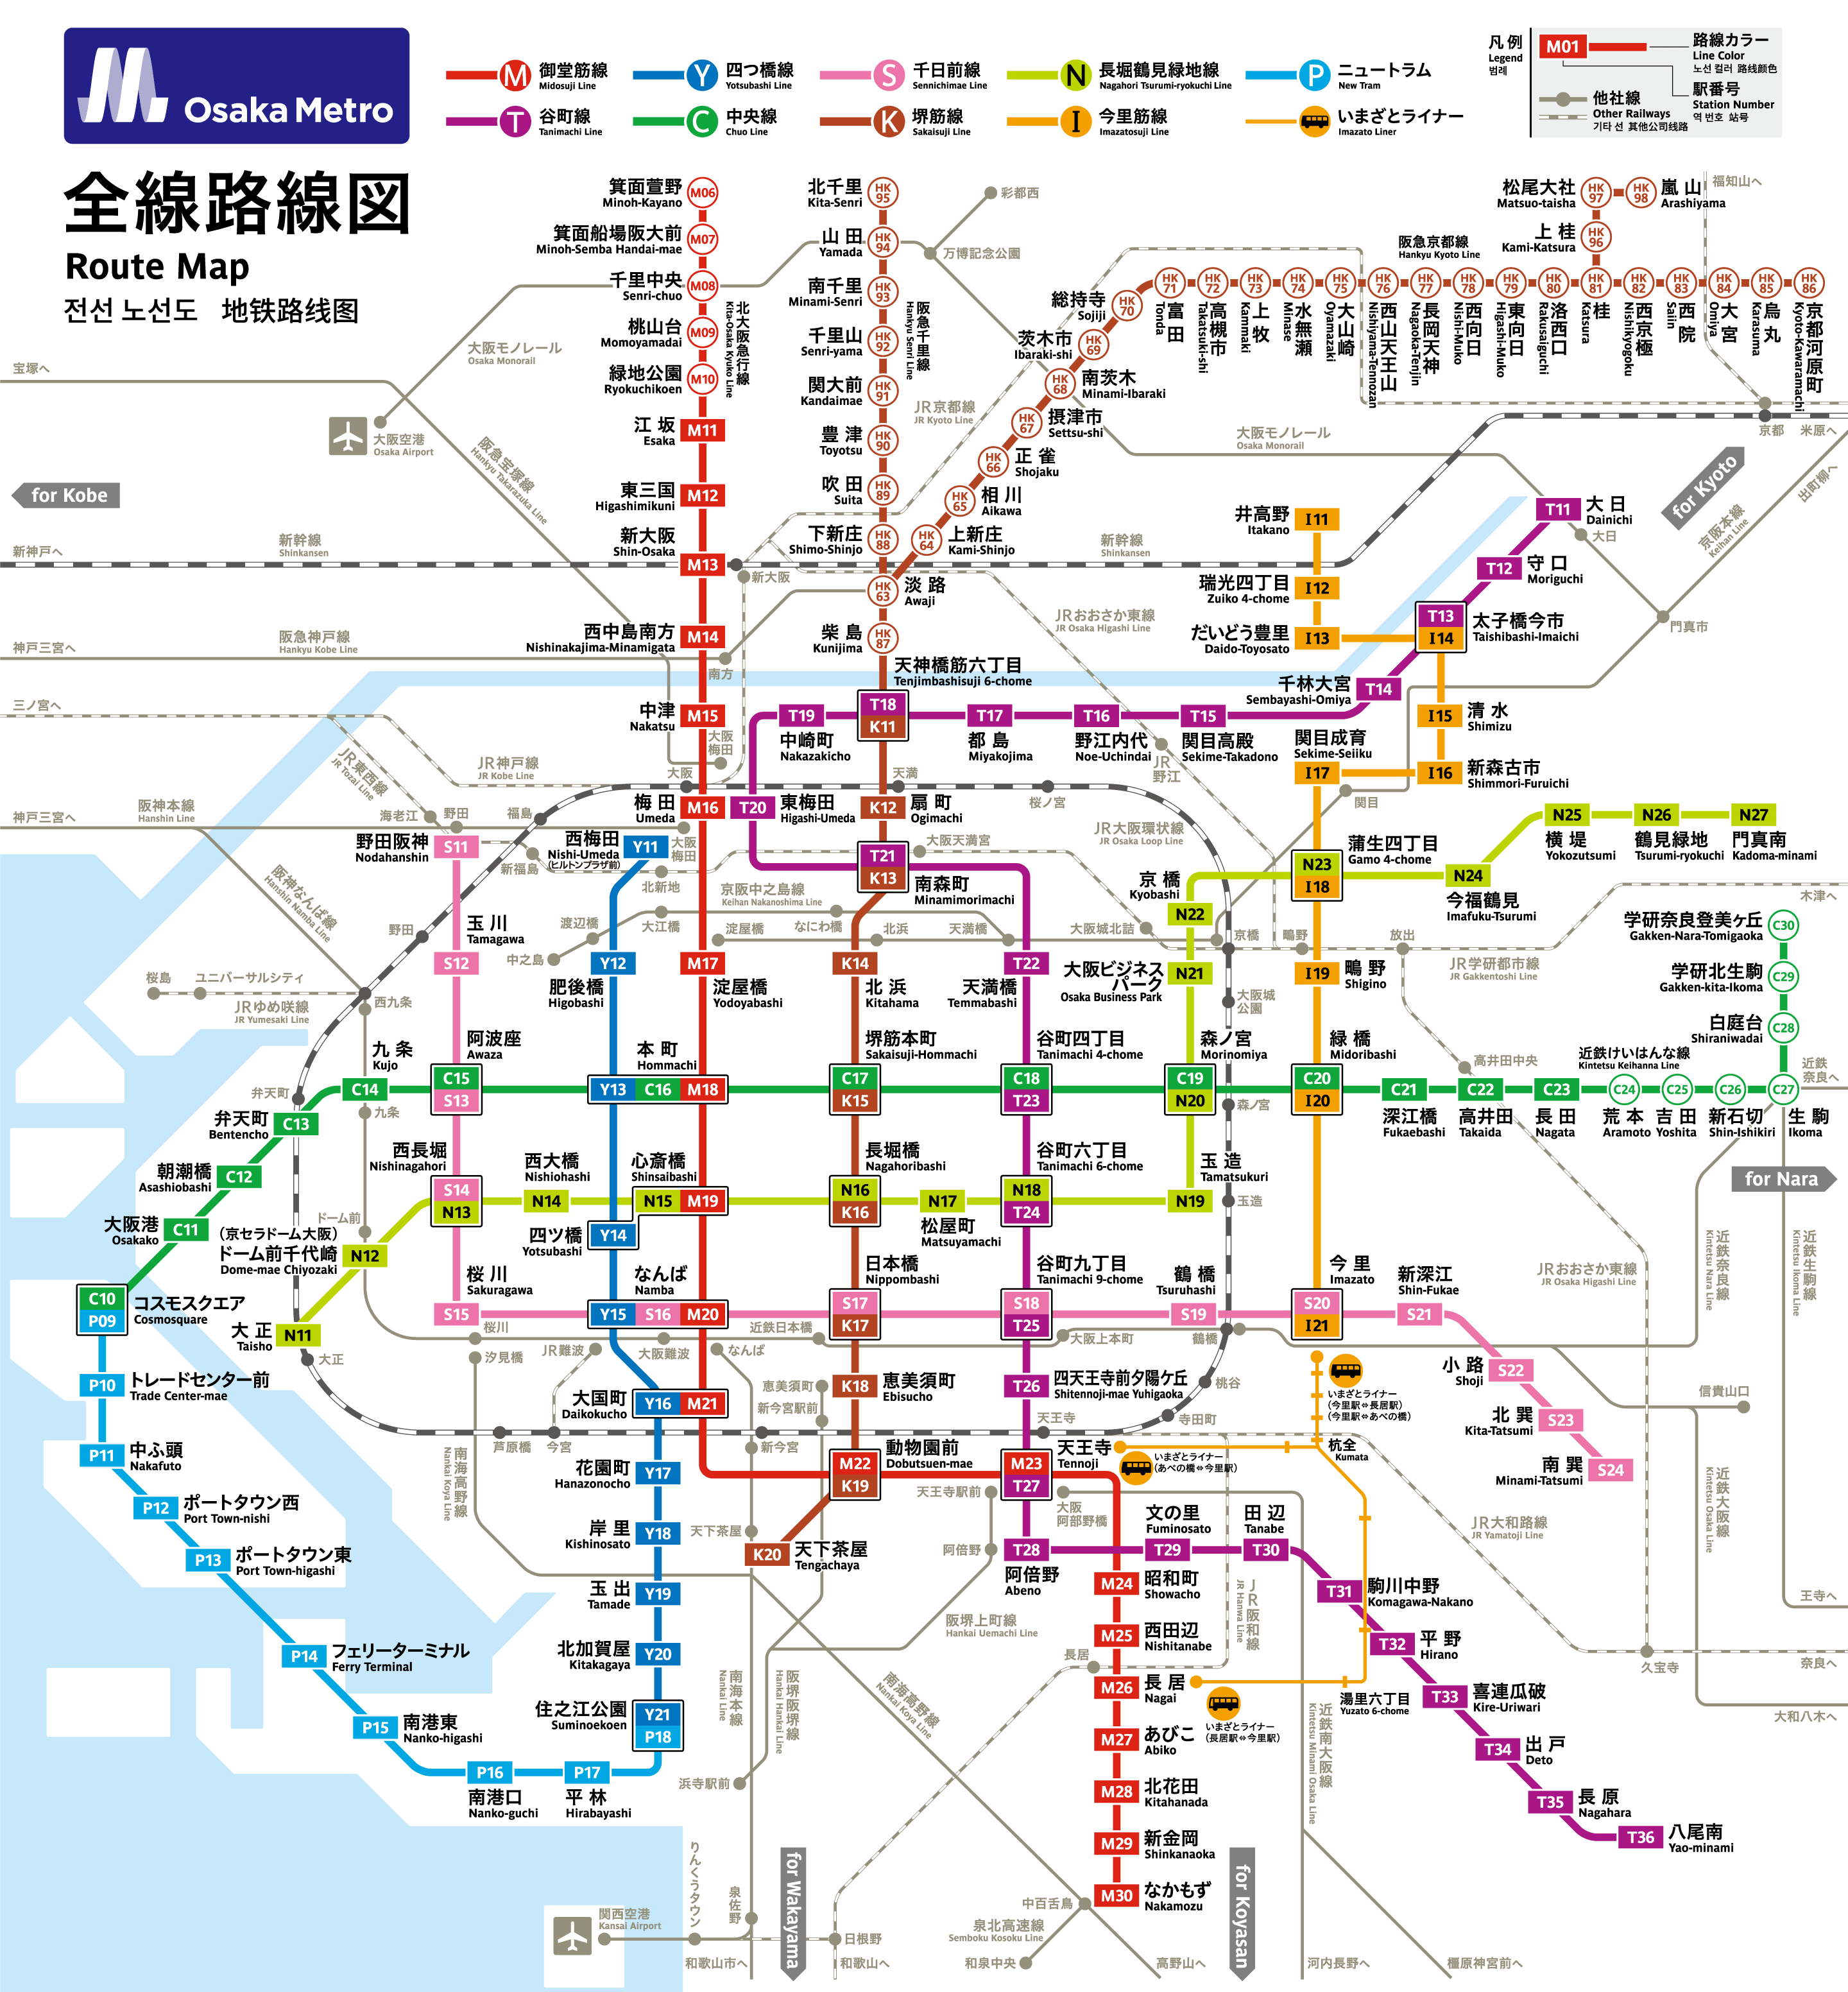 Route map｜Osaka Metro